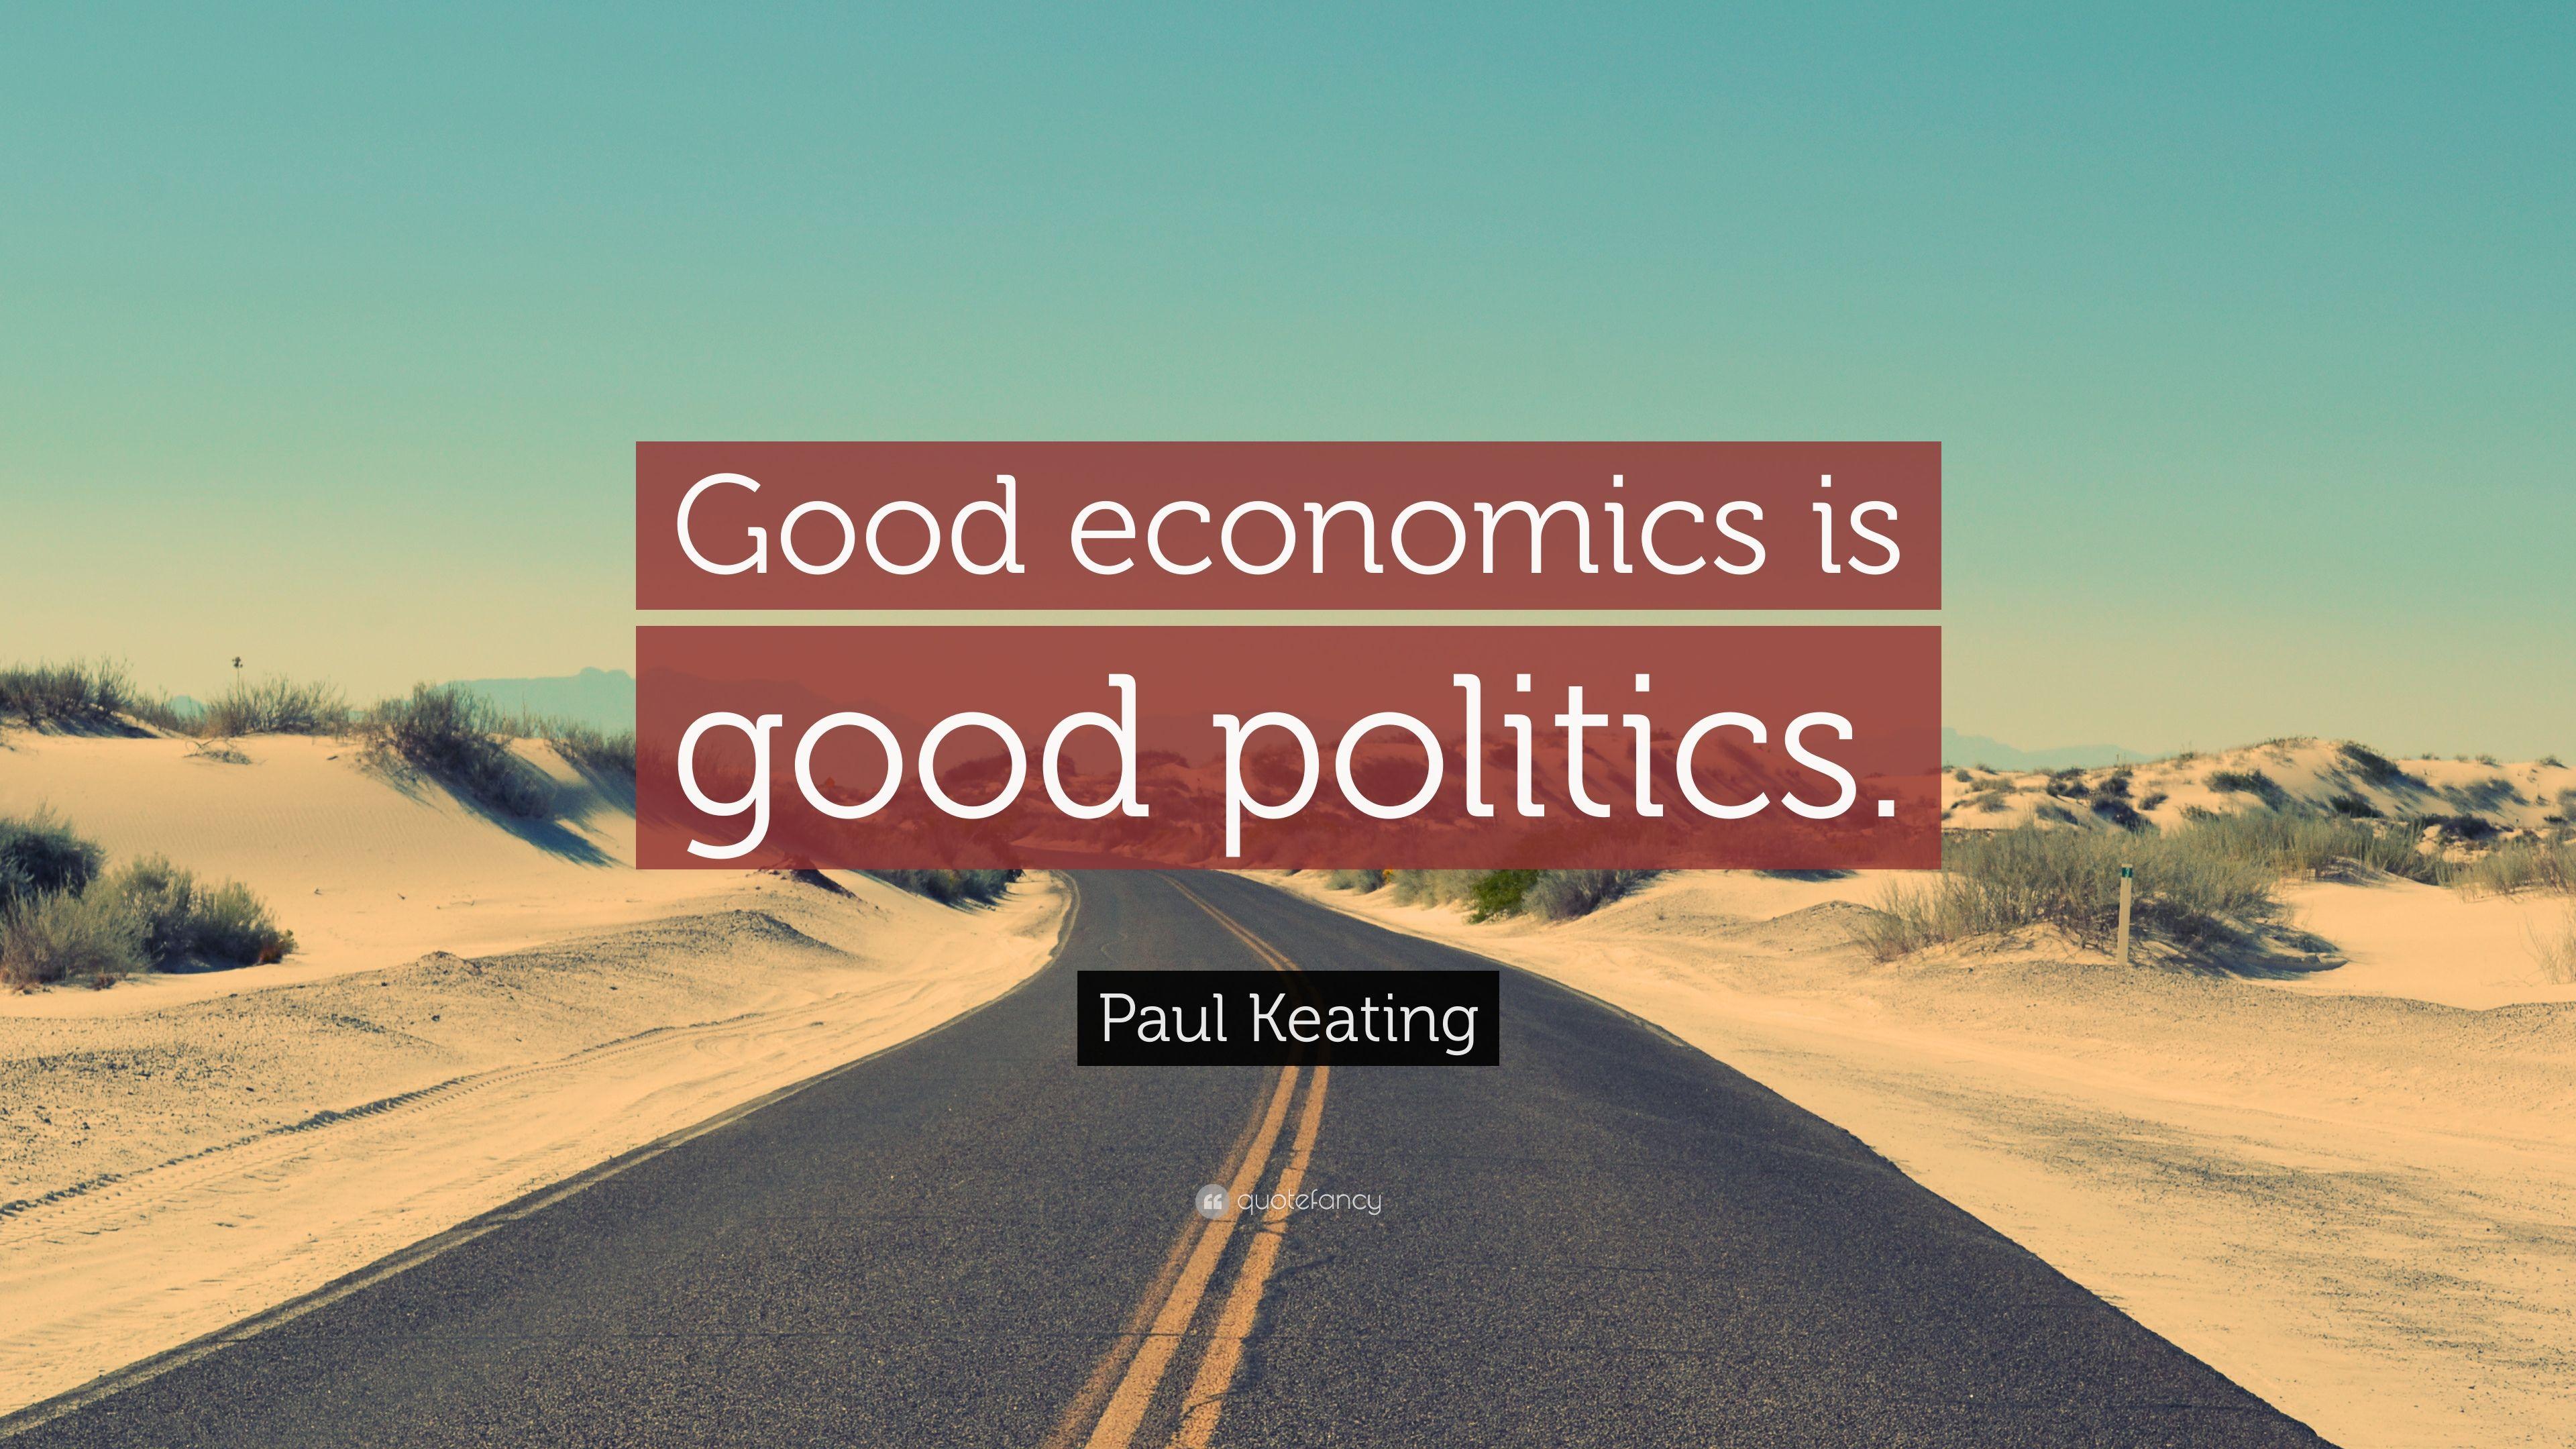 Paul Keating Quote: “Good economics is good politics.” 7 wallpaper